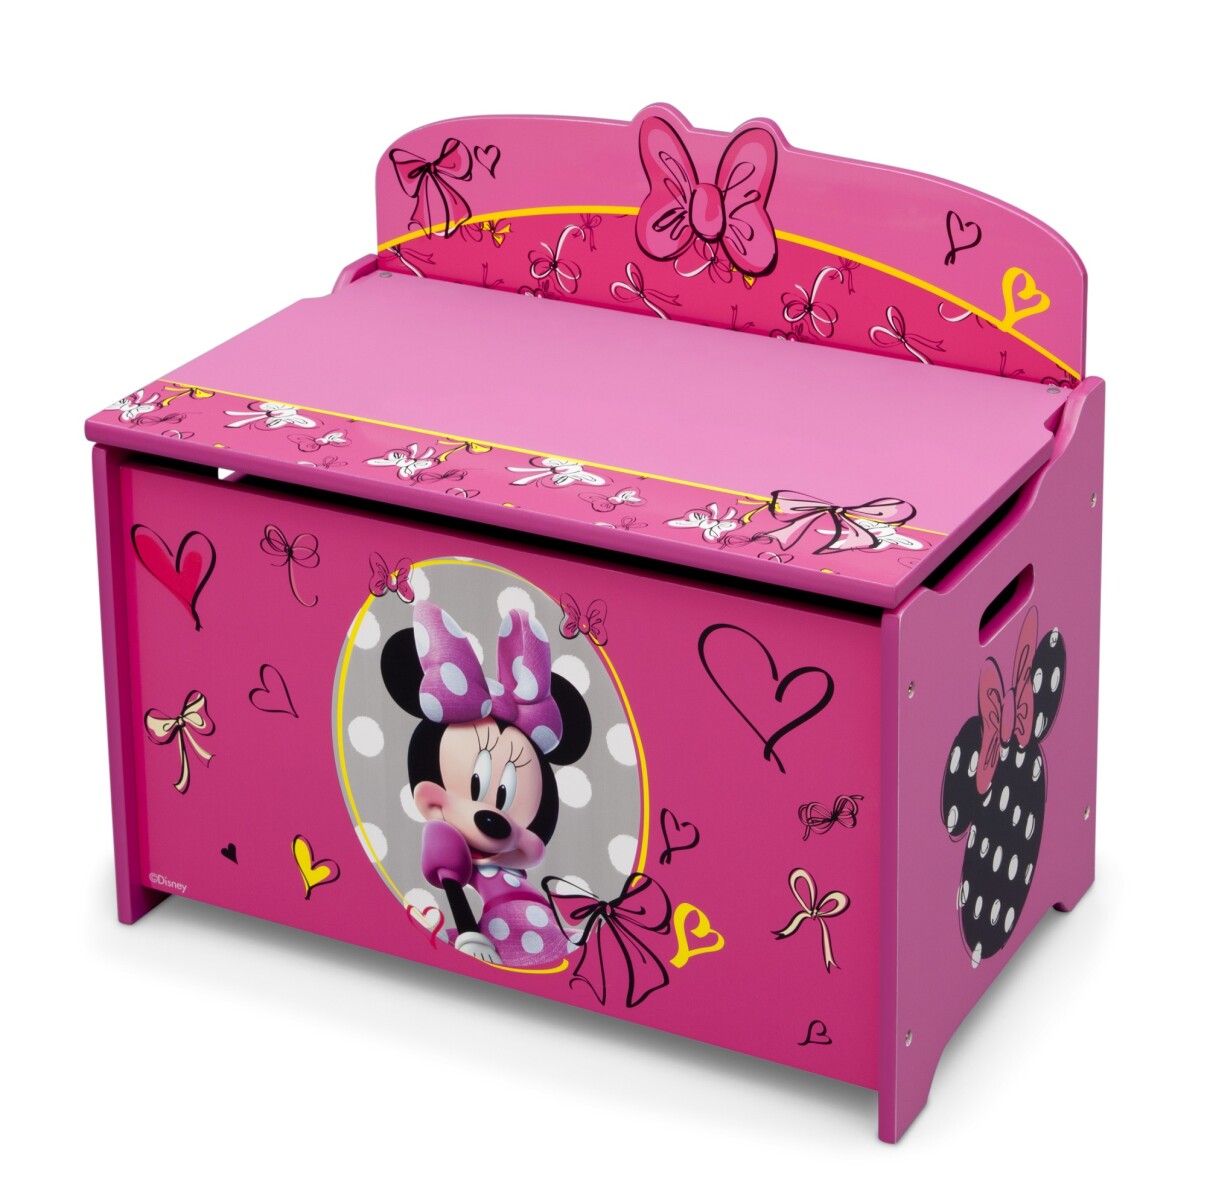 Caja para Juguetes Minnie Mouse Disney Deluxe - 001 